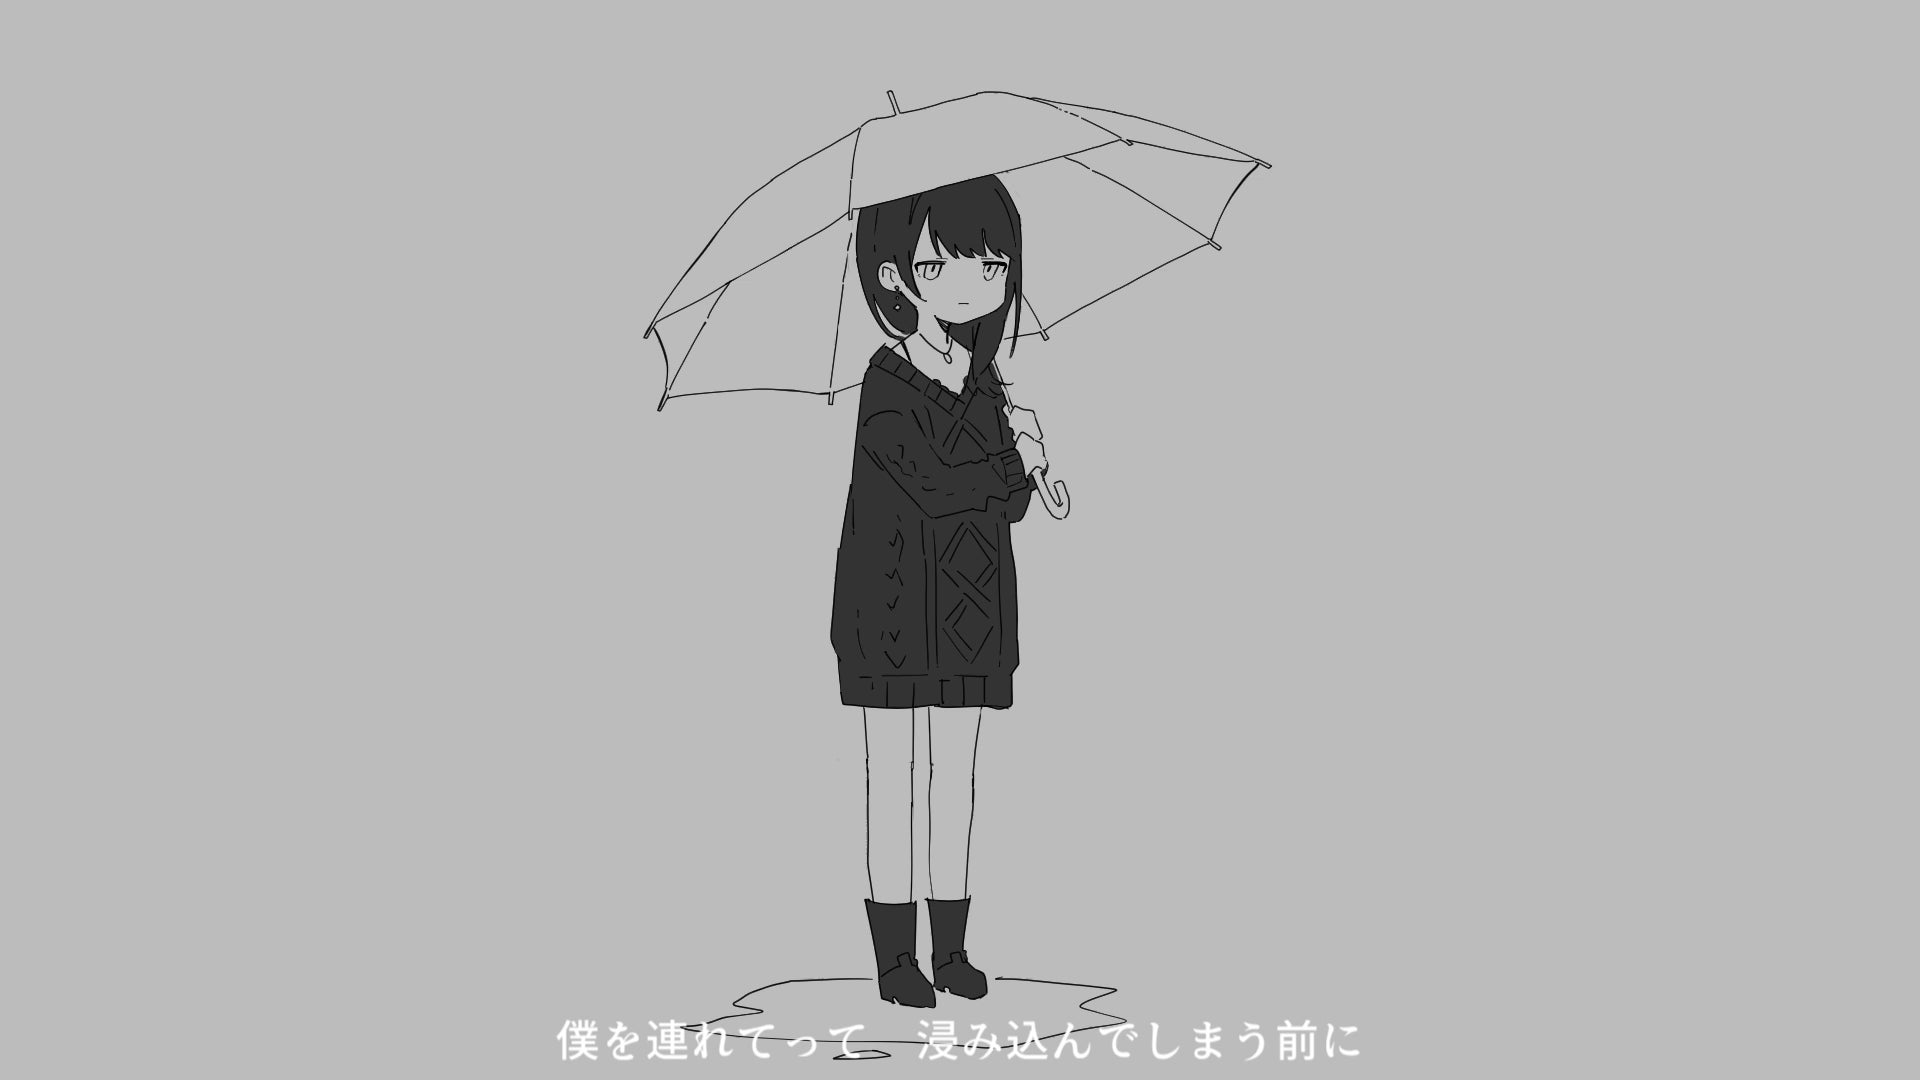 Lost Umbrella / Inabakumori